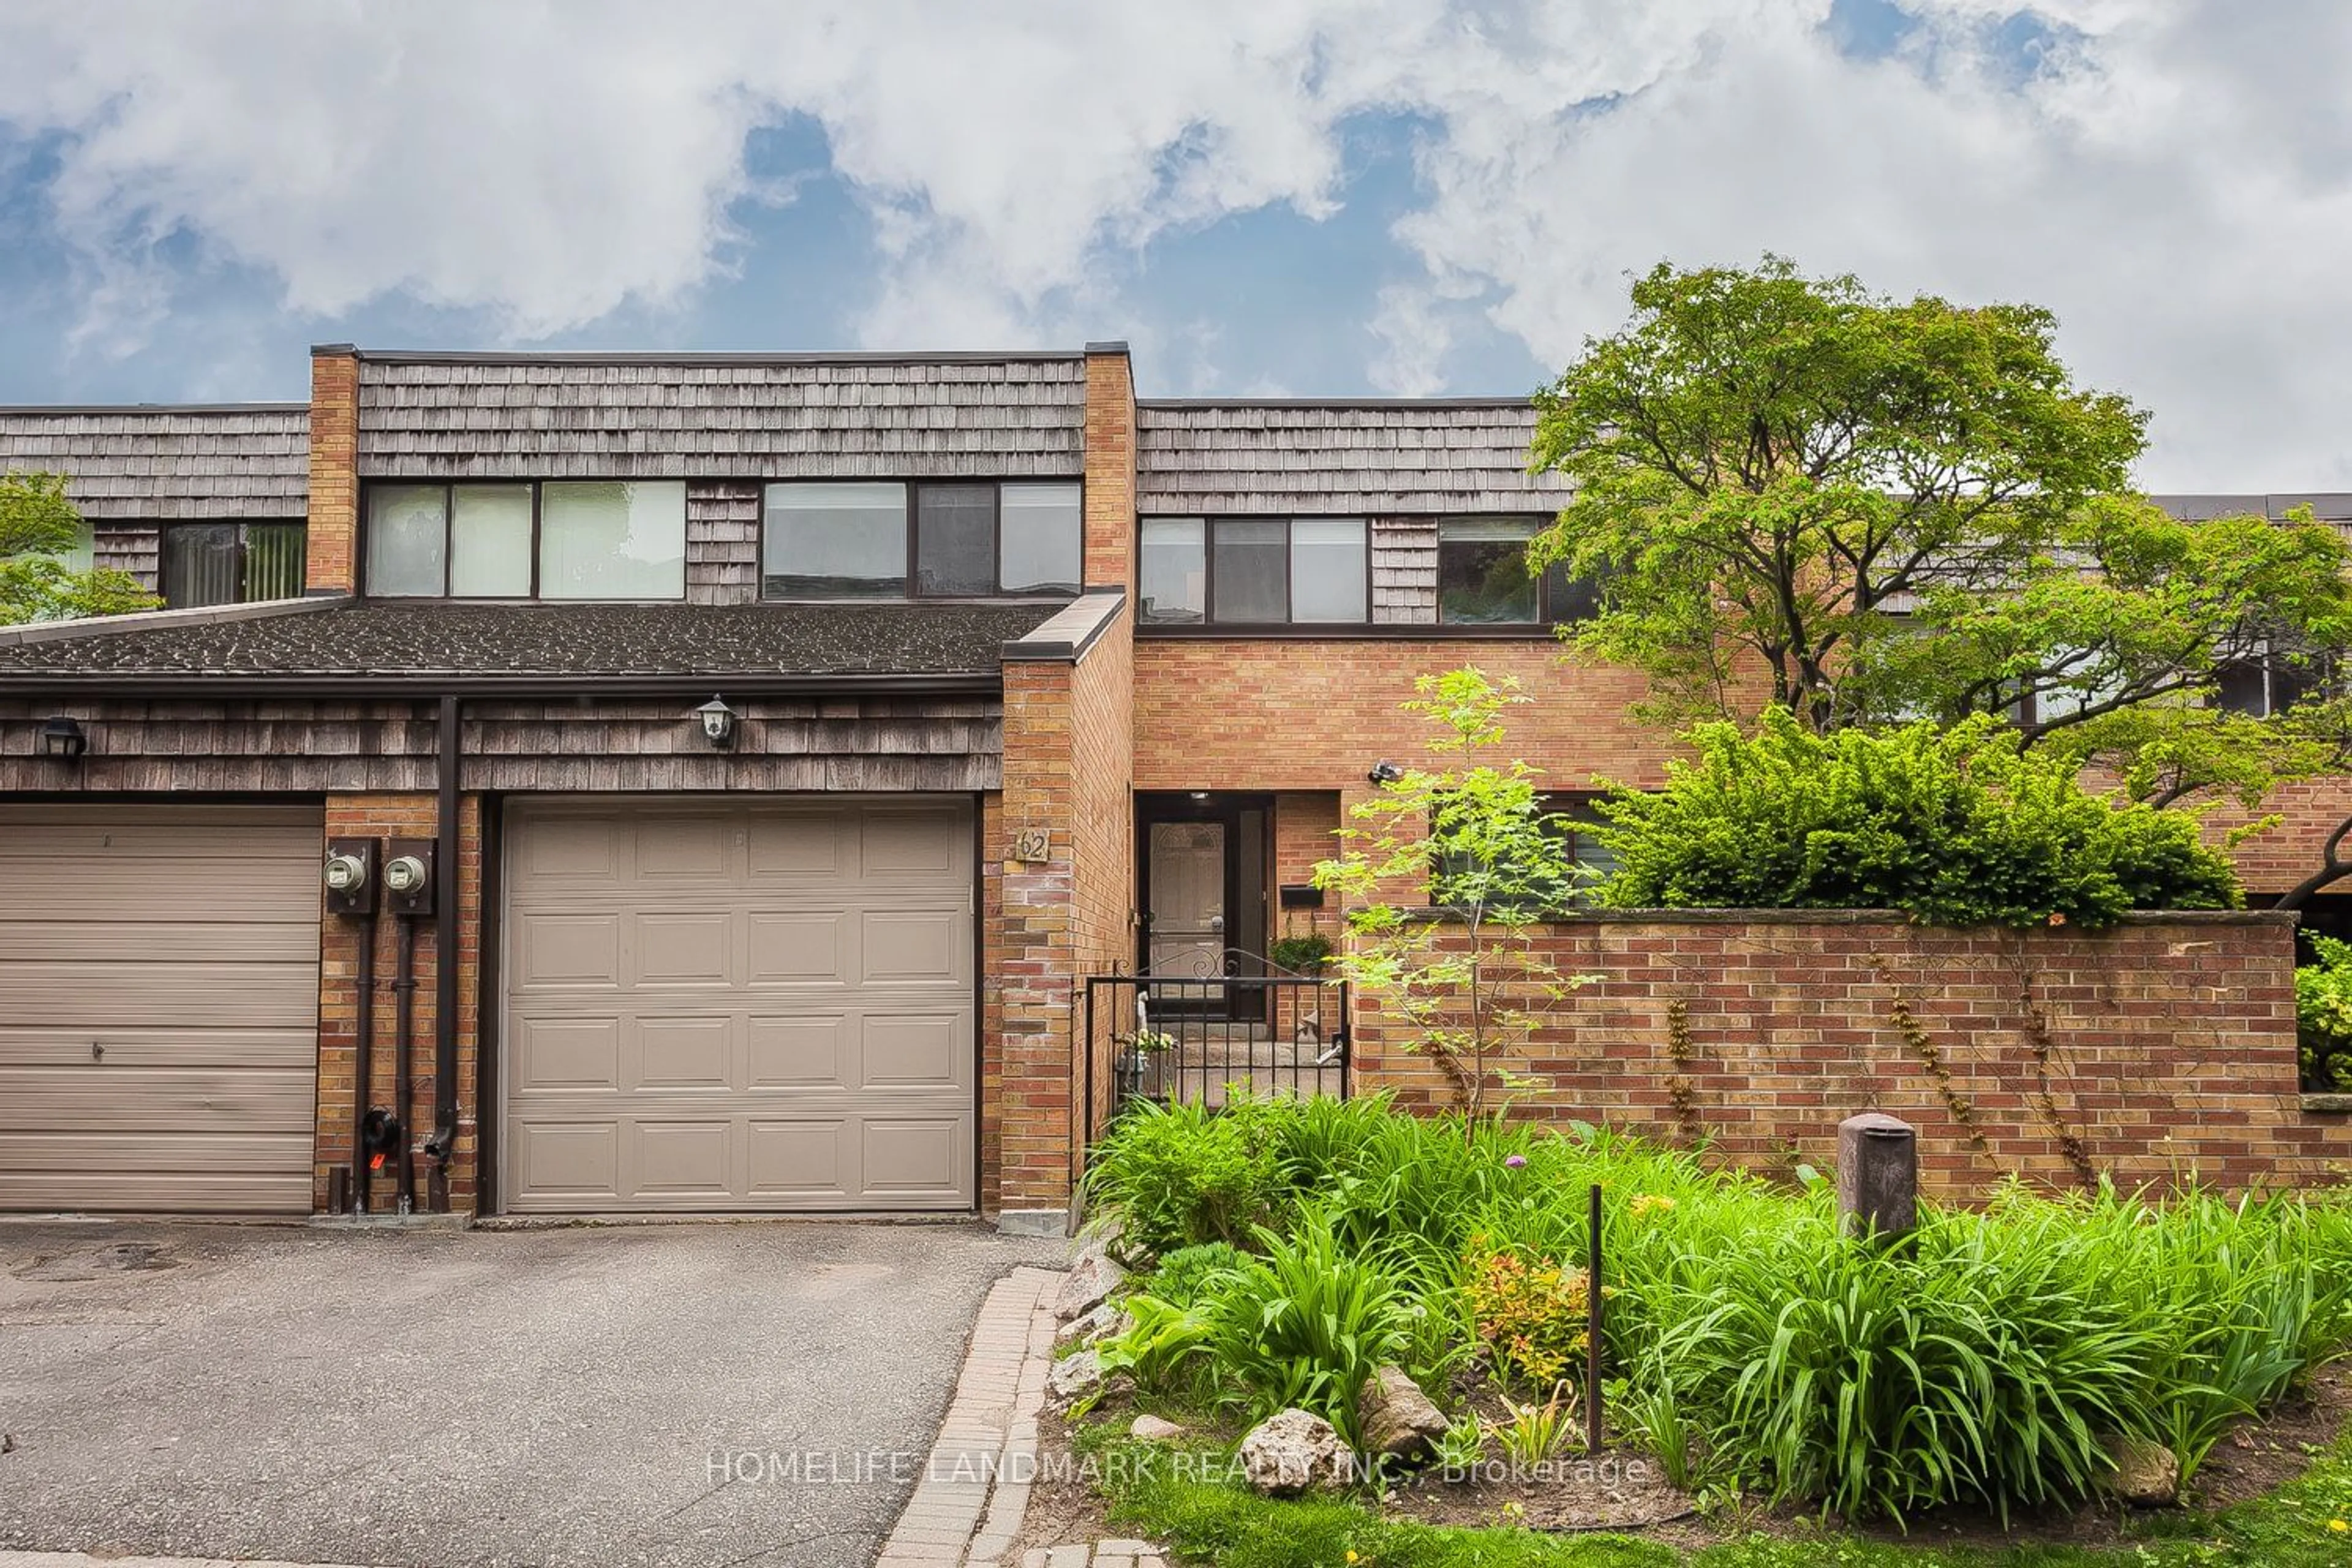 Home with brick exterior material for 62 Carl Shepway Way, Toronto Ontario M2J 1X4